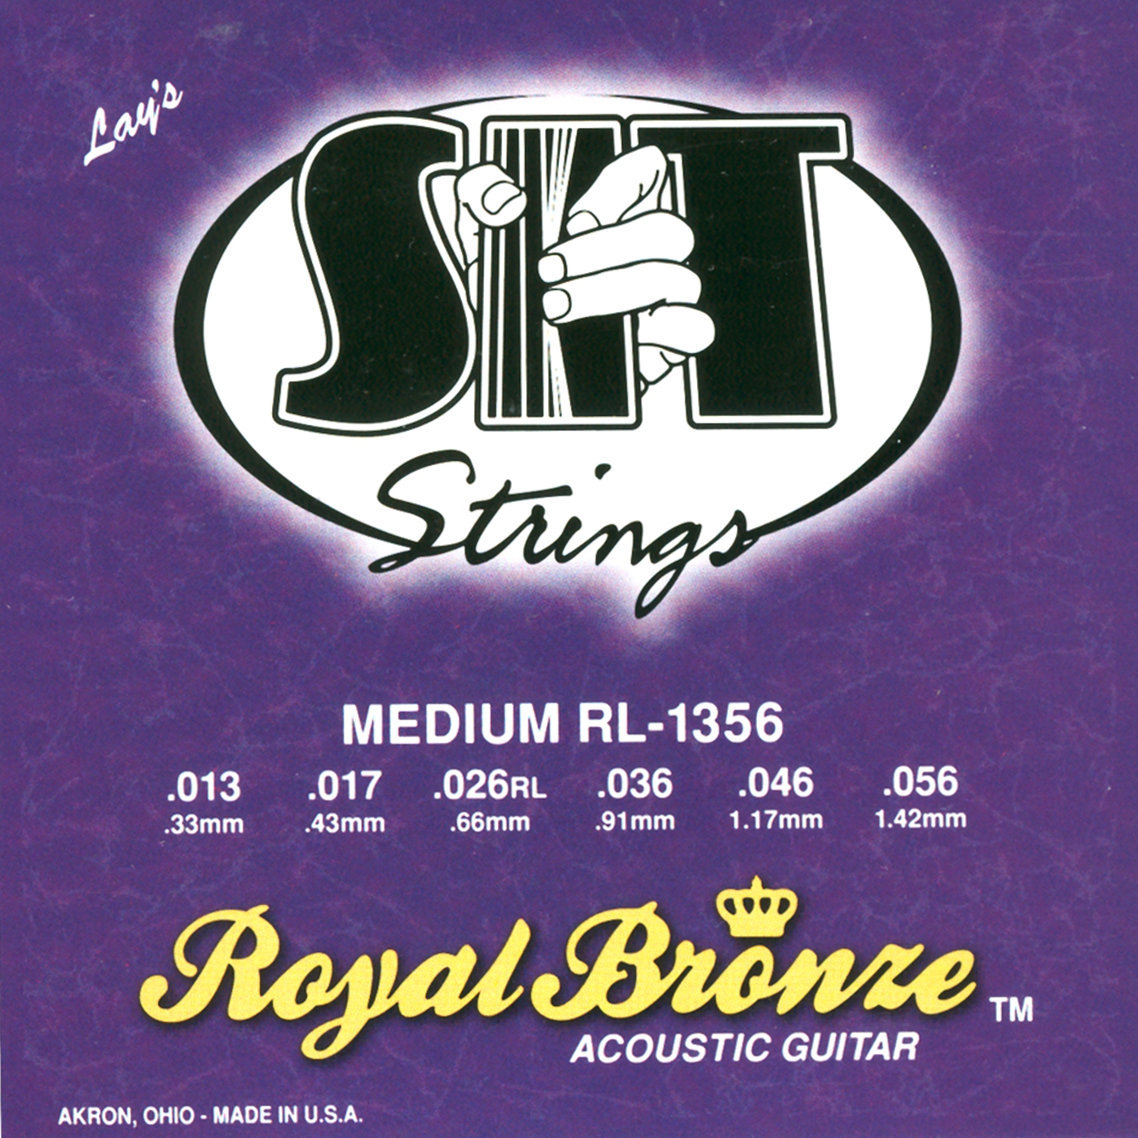 Guitar strings SIT Strings RL1356 Royal Bronze Acoustic Medium